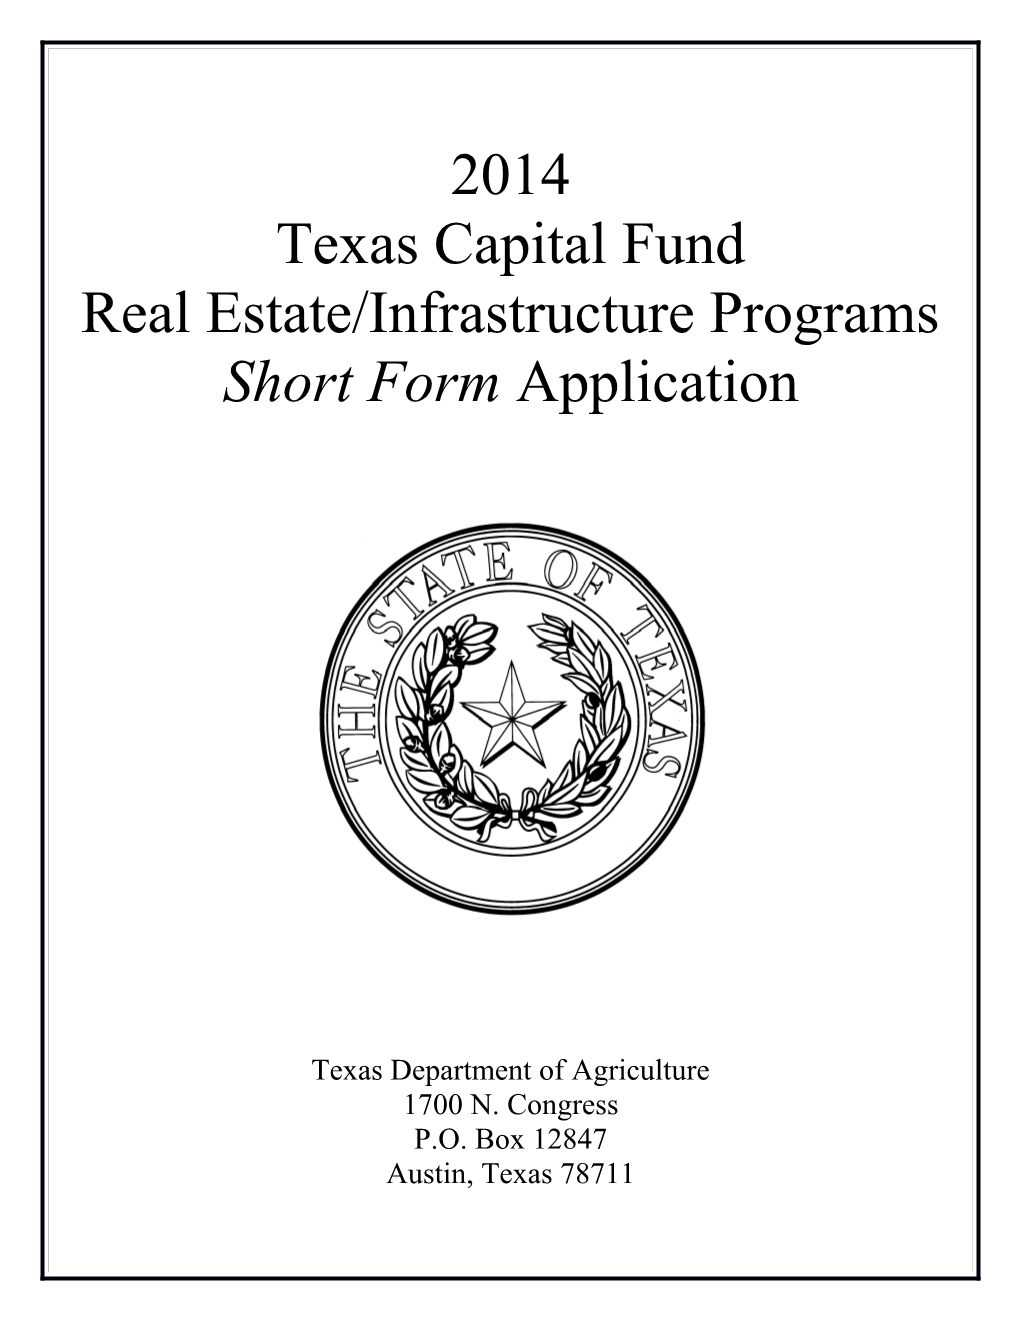 Real Estate/Infrastructure Programs